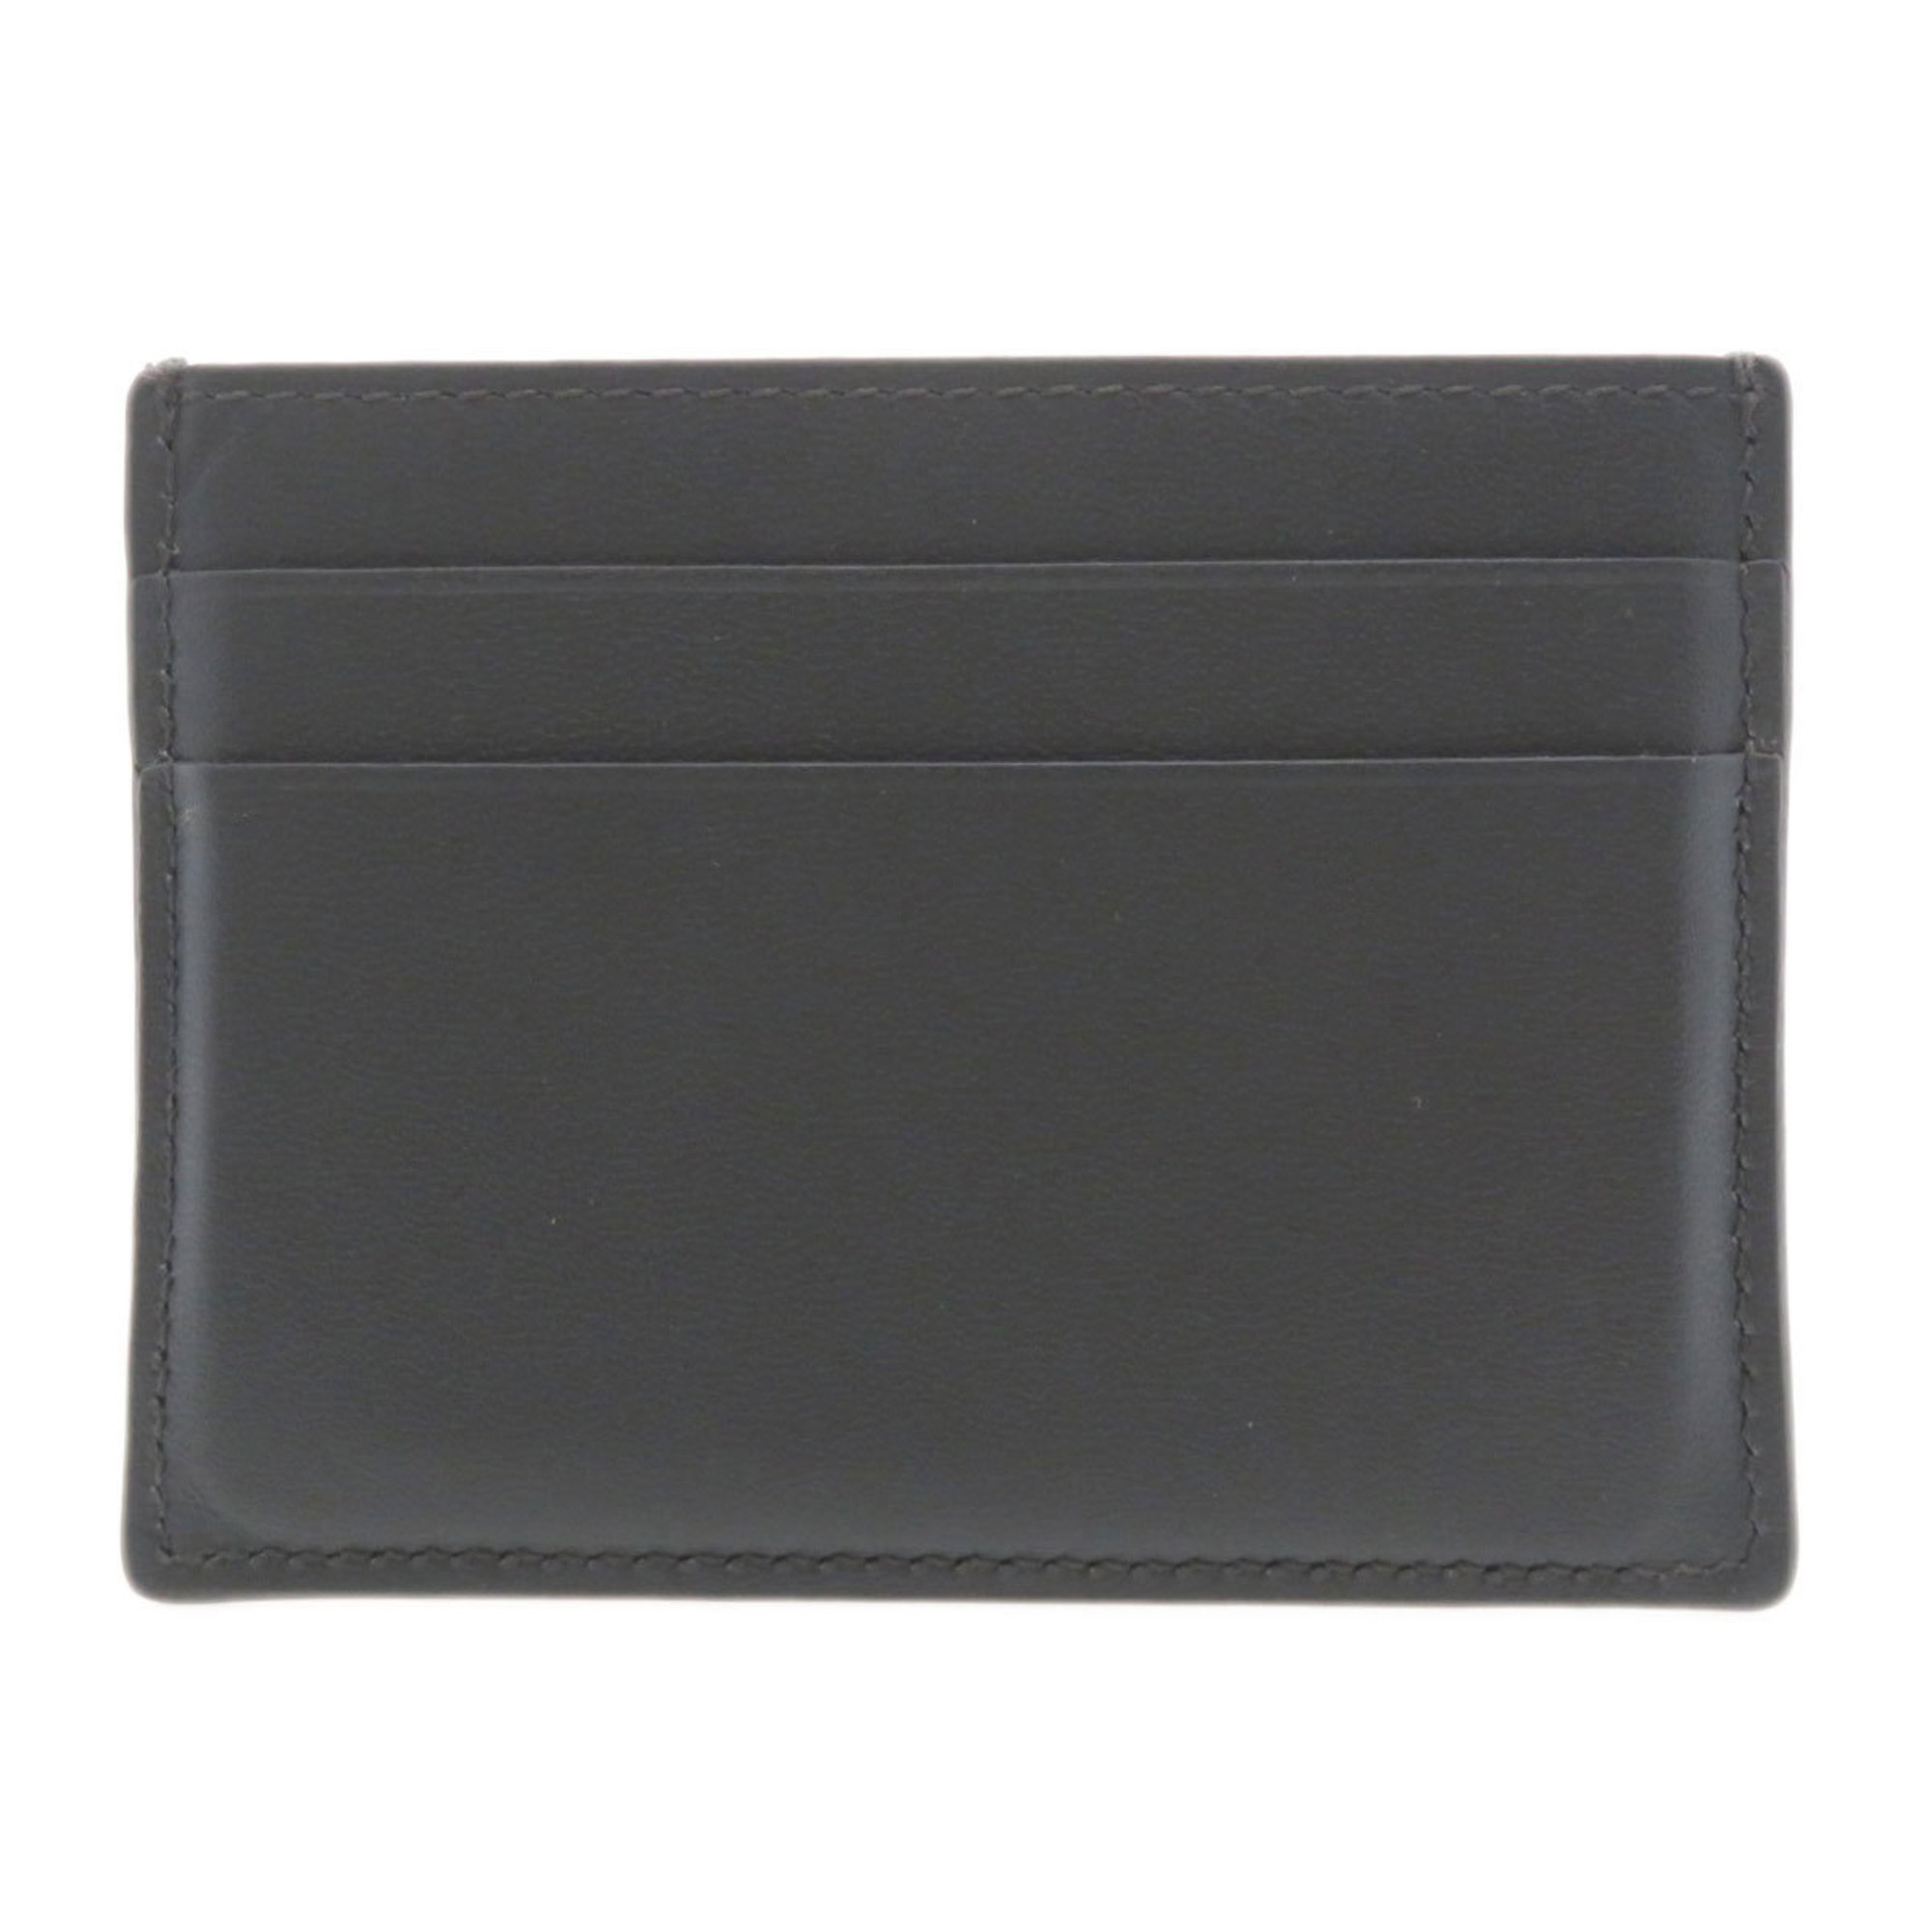 Balenciaga metal business card holder/card case in calf leather for men